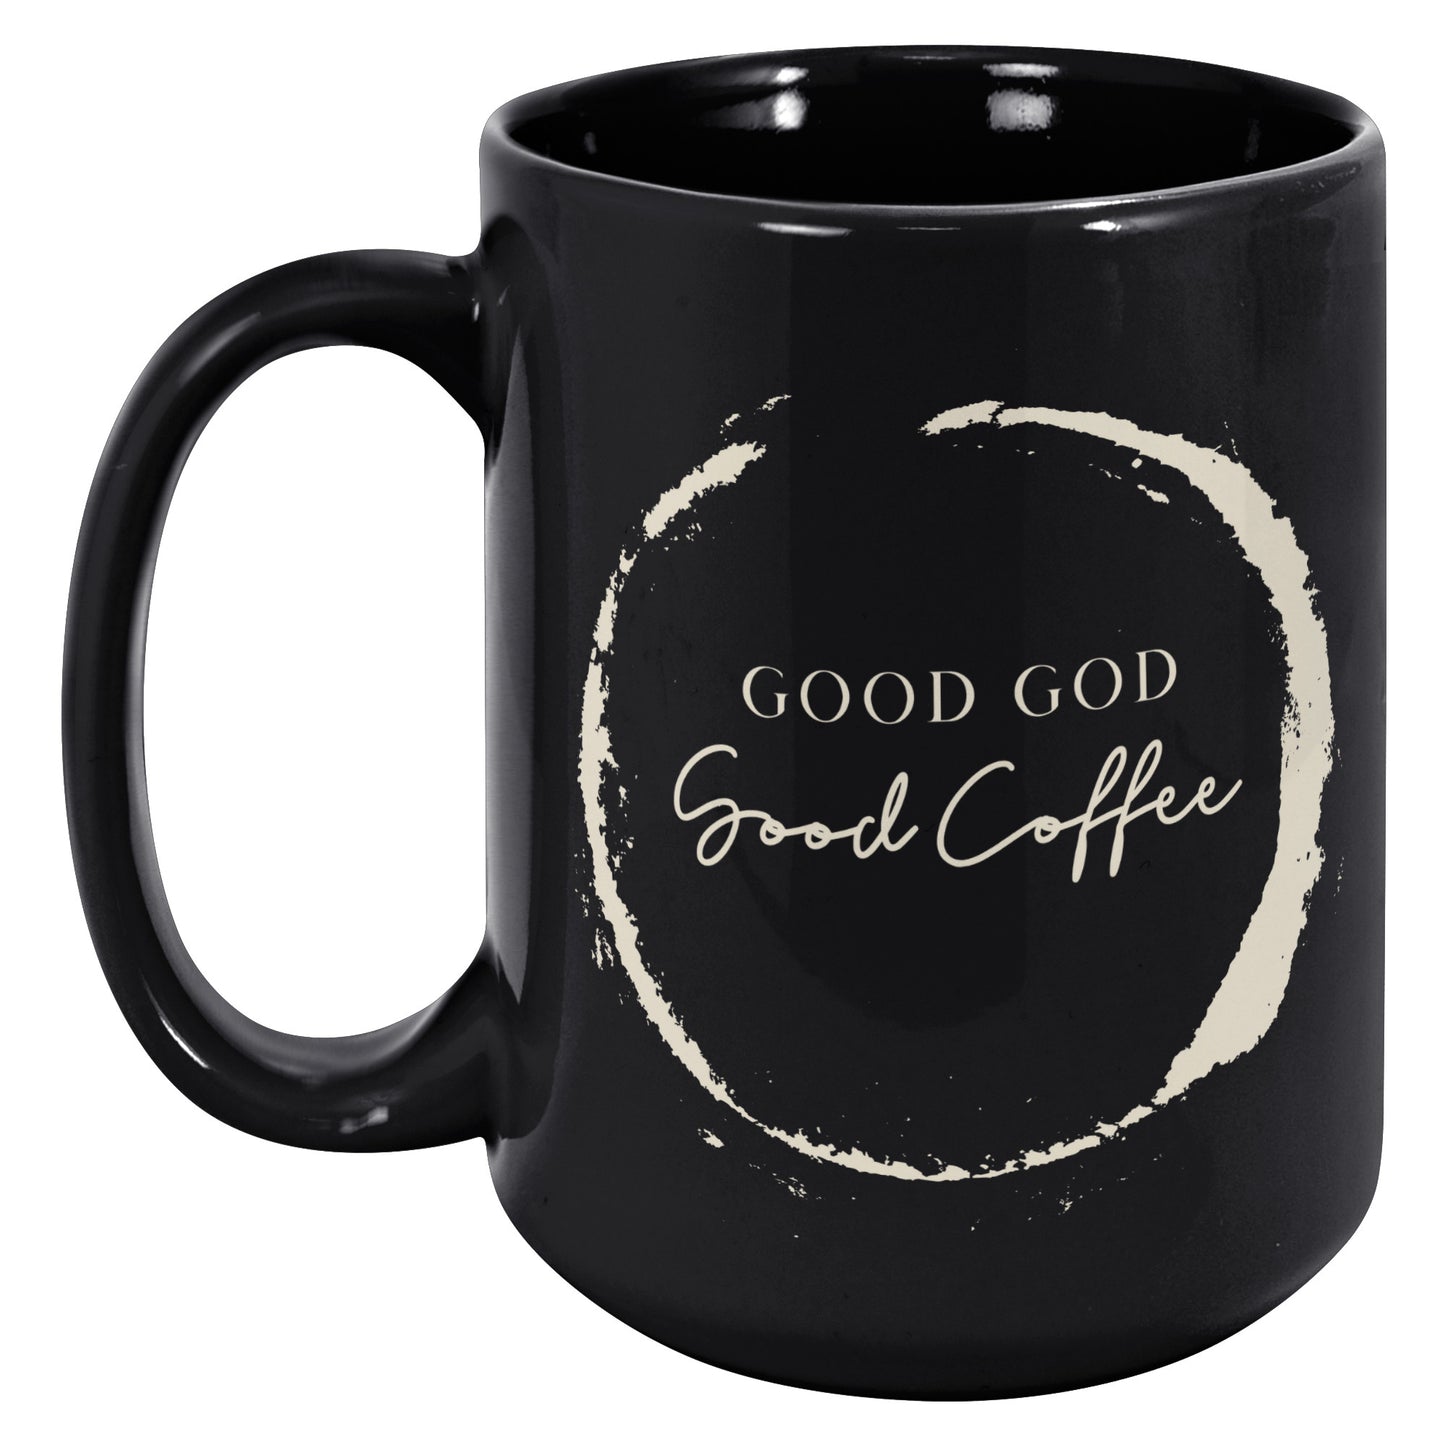 Good God Good Coffee 15 oz Ceramic Black Mug